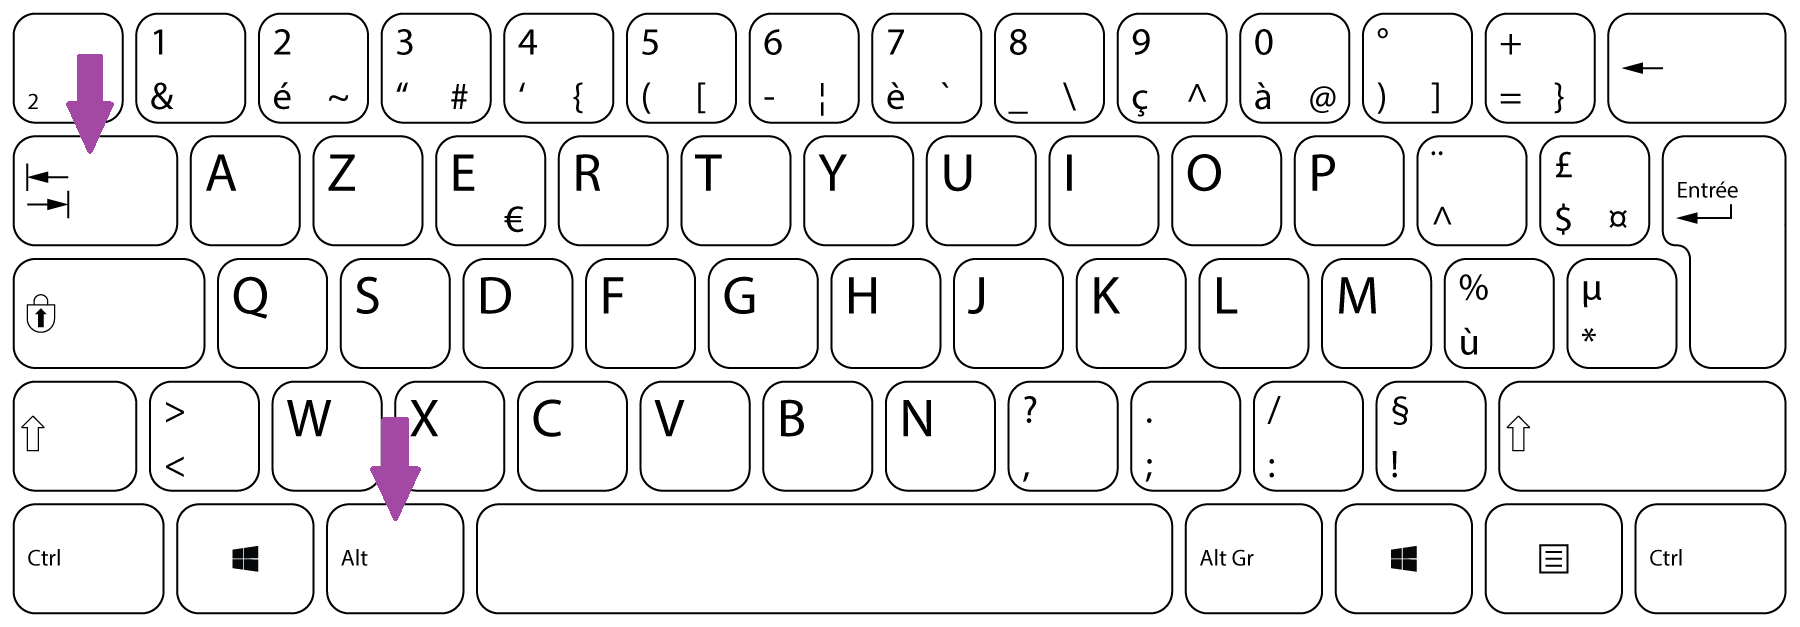 Буквы клавиатуры поменялись местами